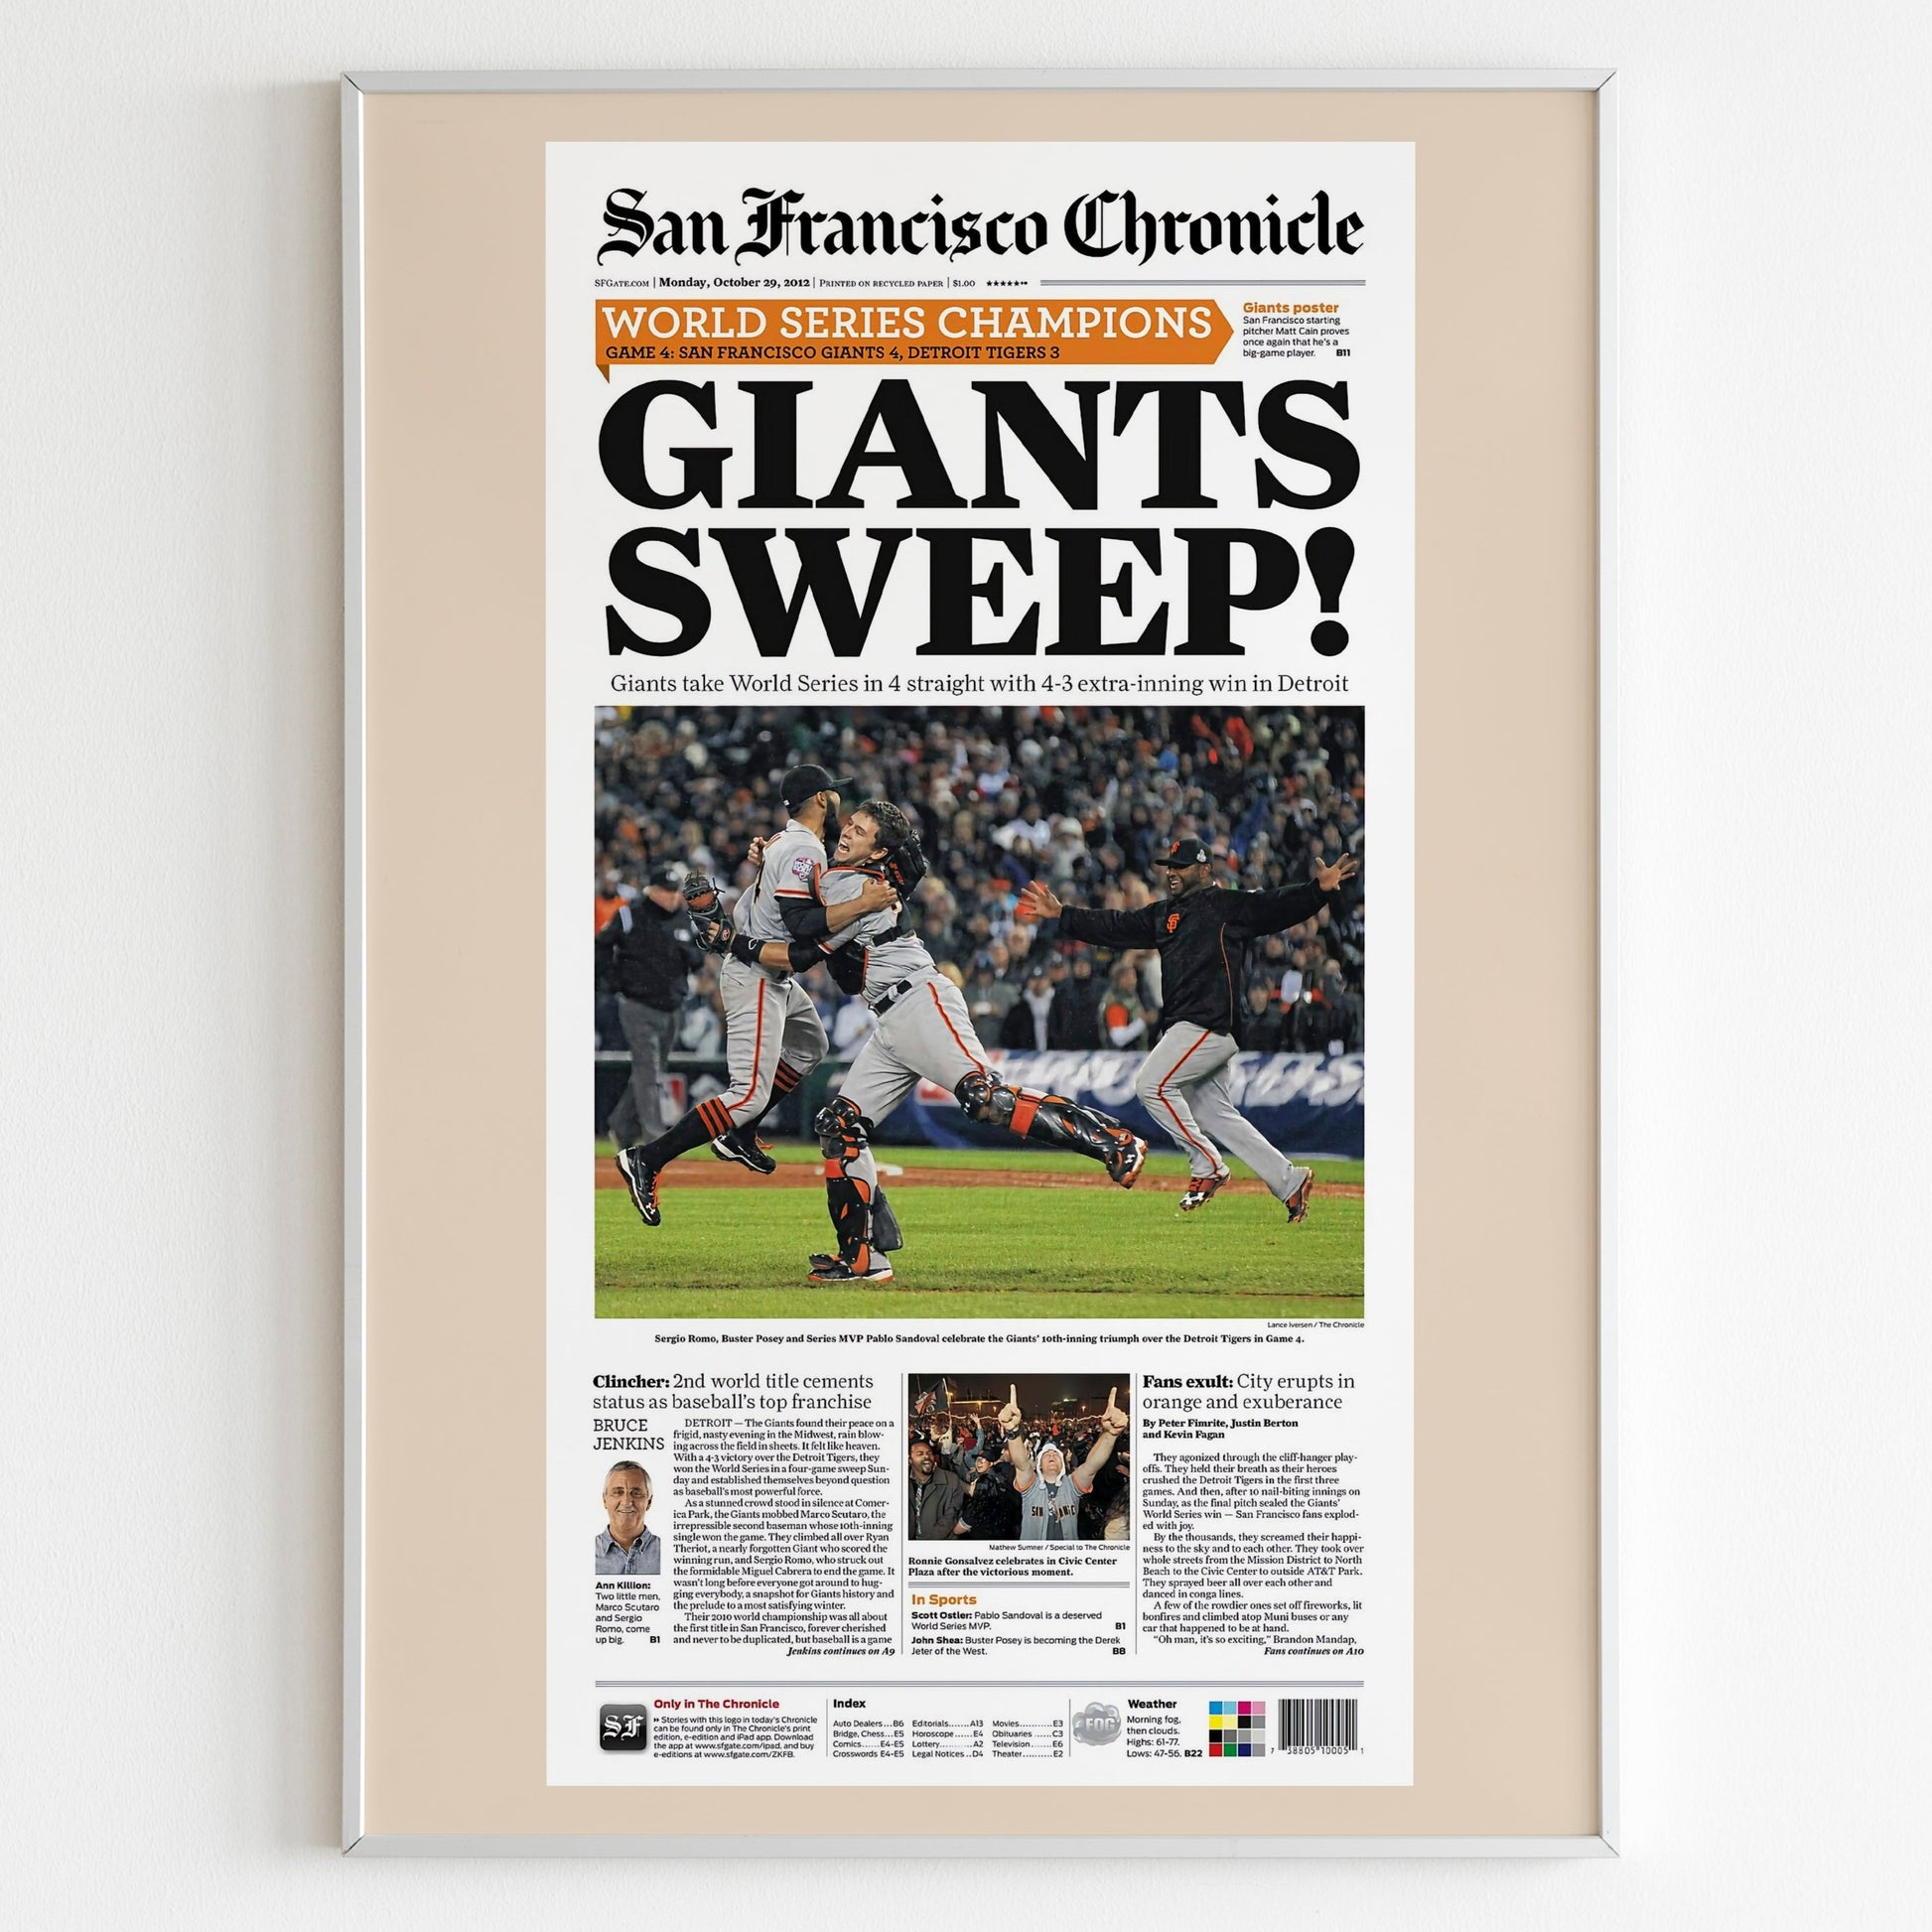 San Francisco Giants 2012 World Series MLB Champions Front Cover San Francisco Chronicle Newspaper Poster, Baseball Team Print, Wall Poster